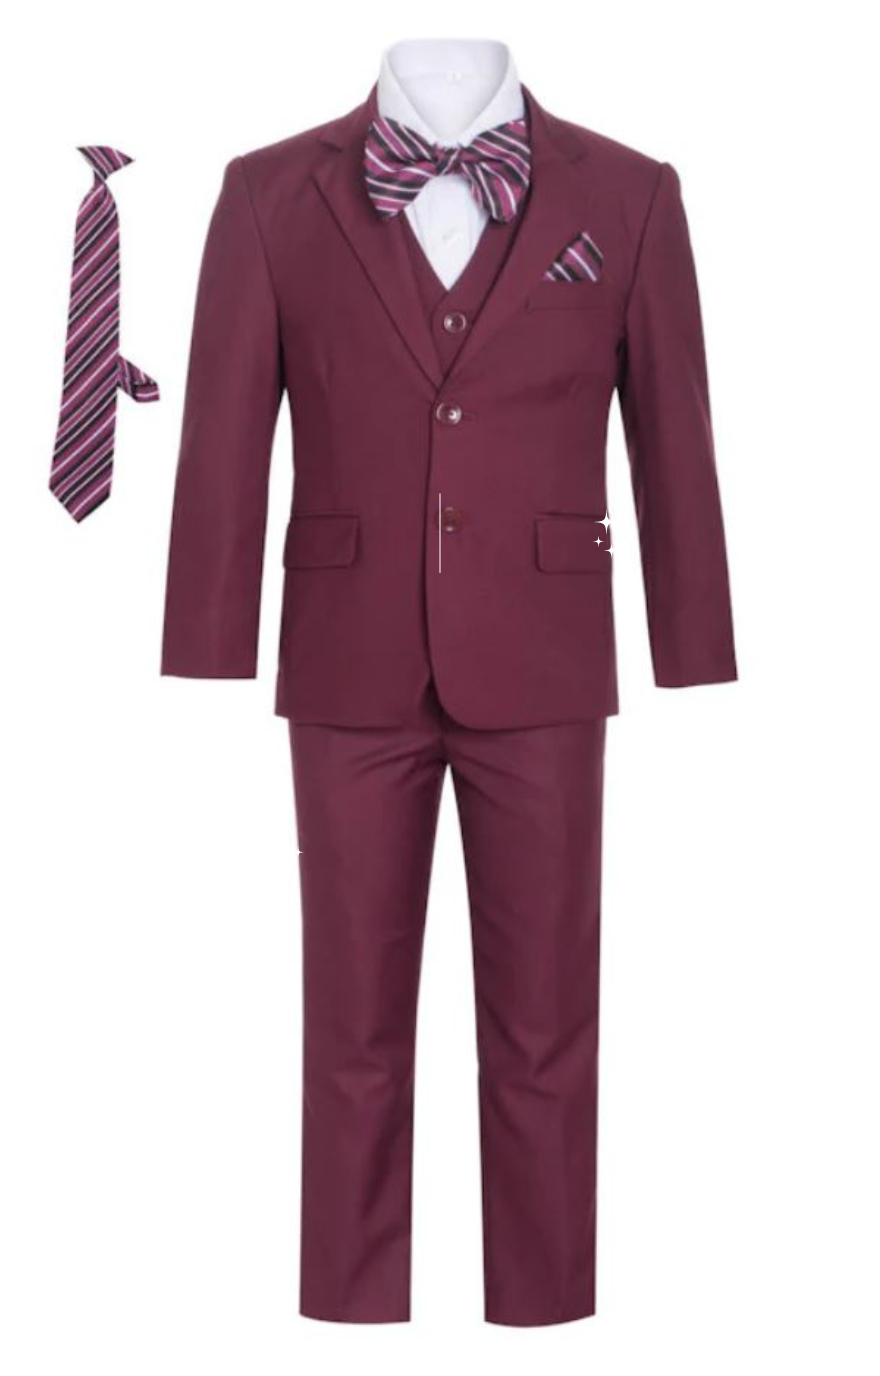 Harry 5pc Boys Suit: BURGUNDY (Slim Fit)